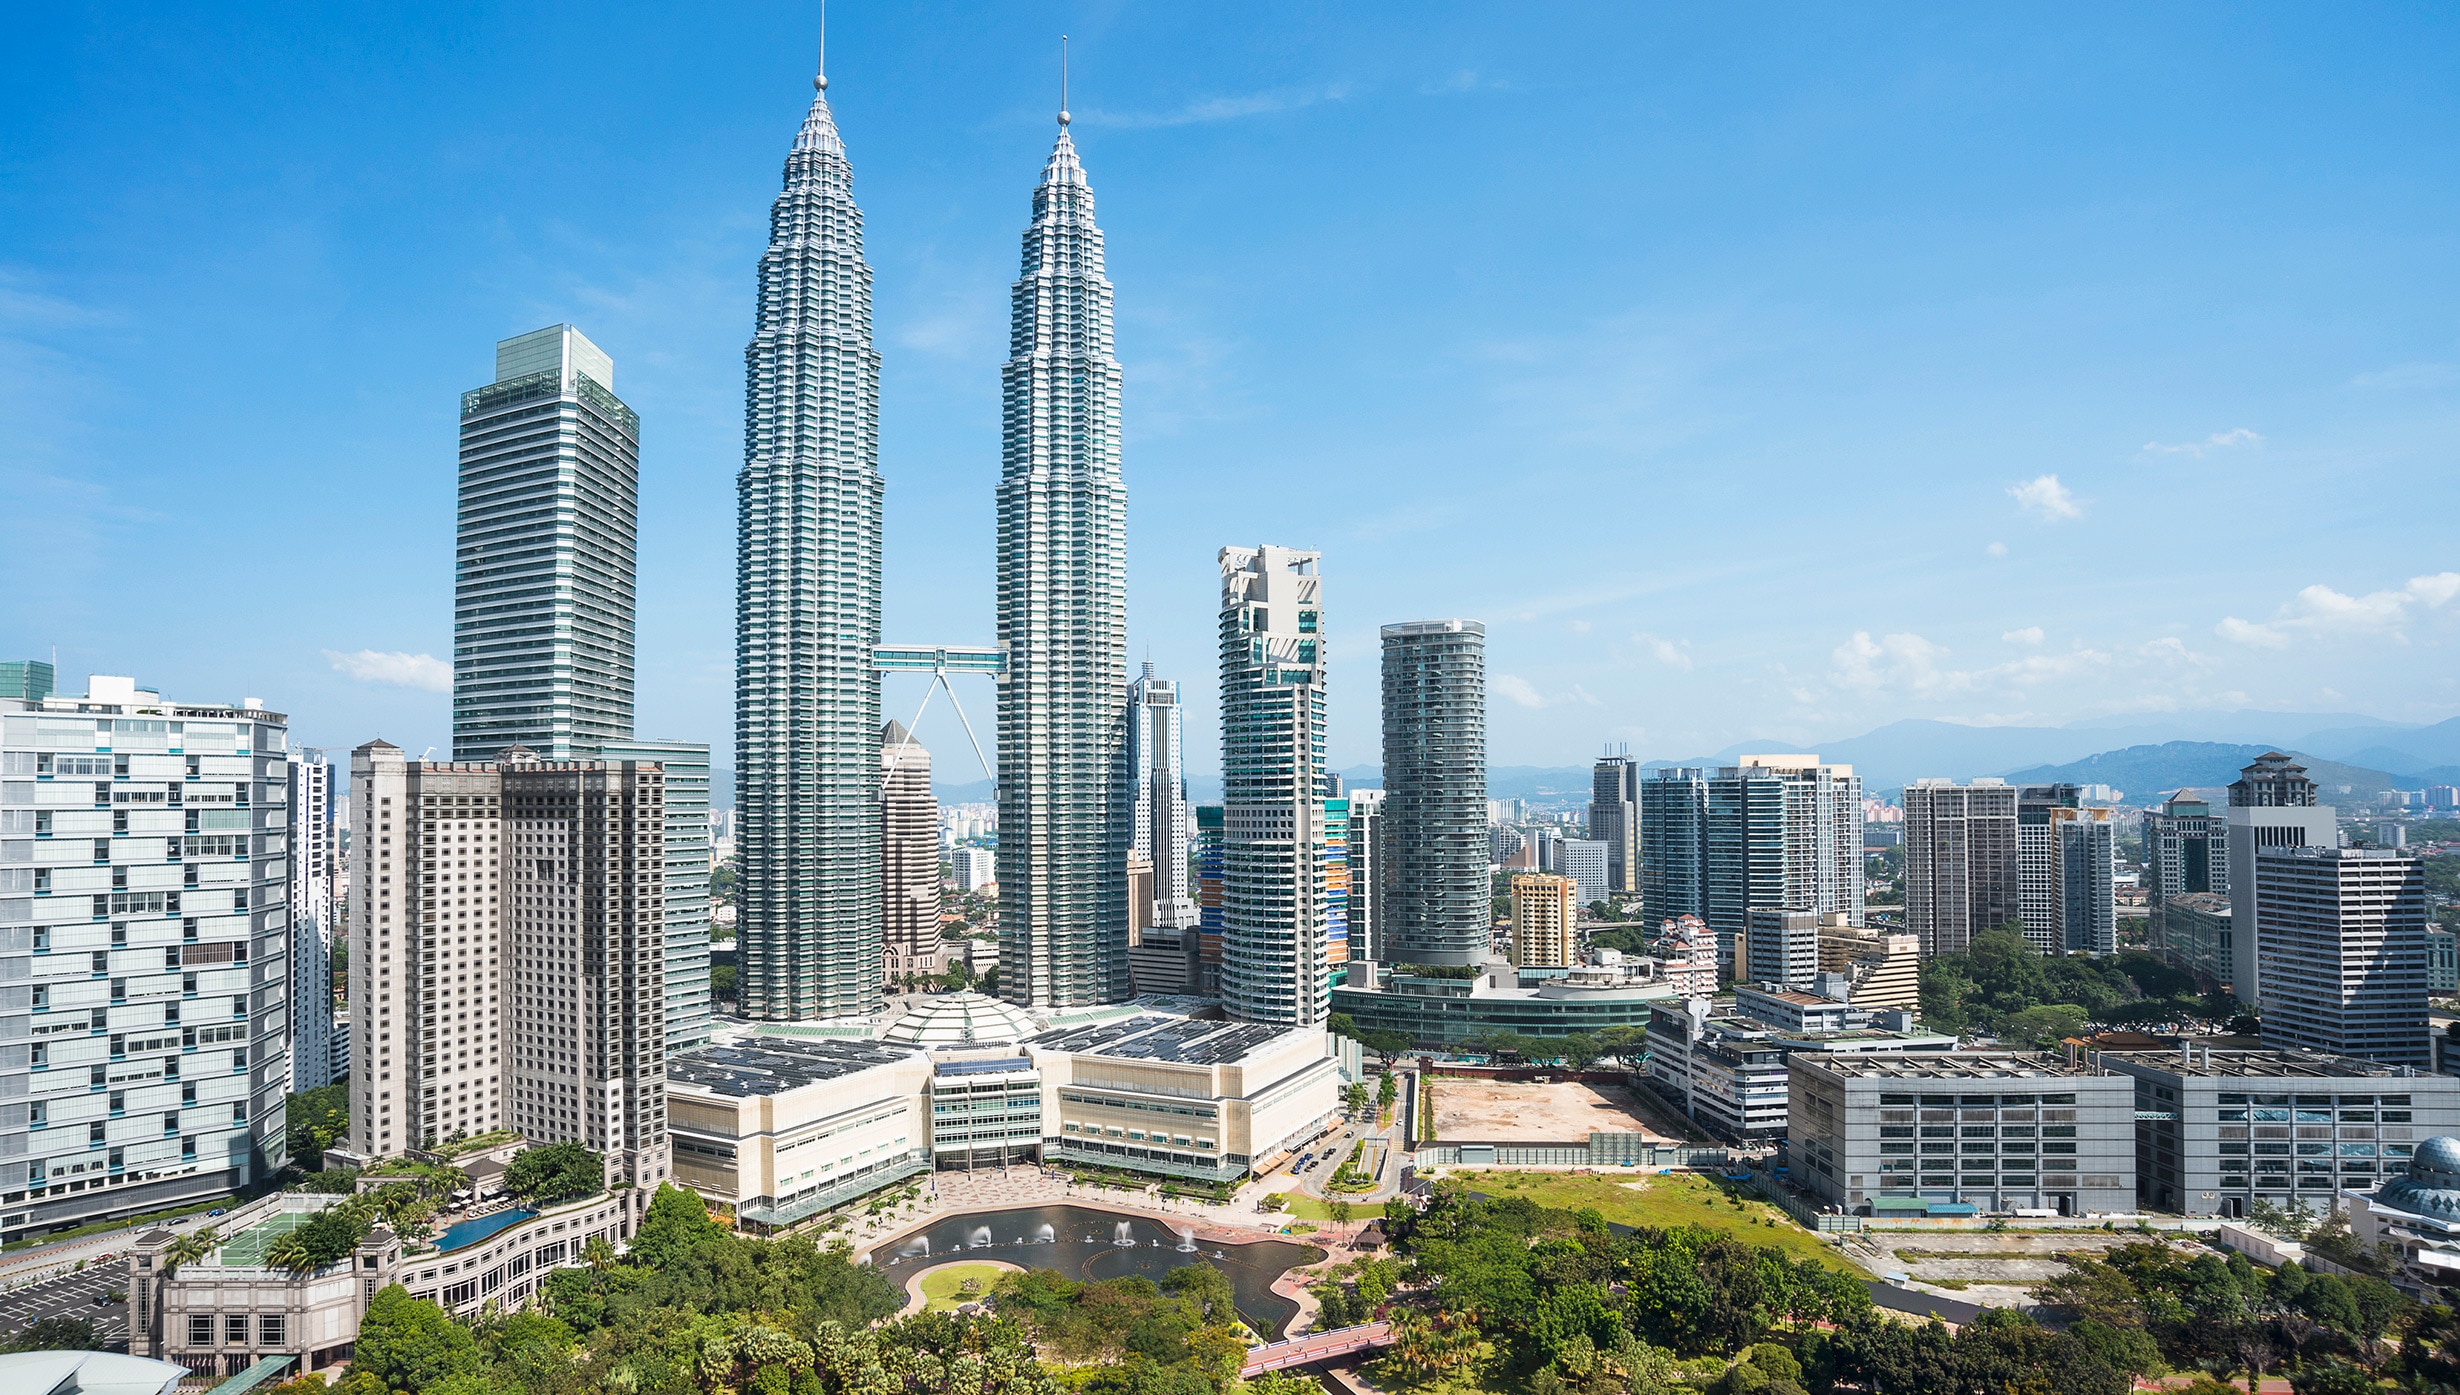 kuala lumpur day view, Petronas Twin Towers - KLCC, Kuala Lumpur City Centre, Traders Hotel